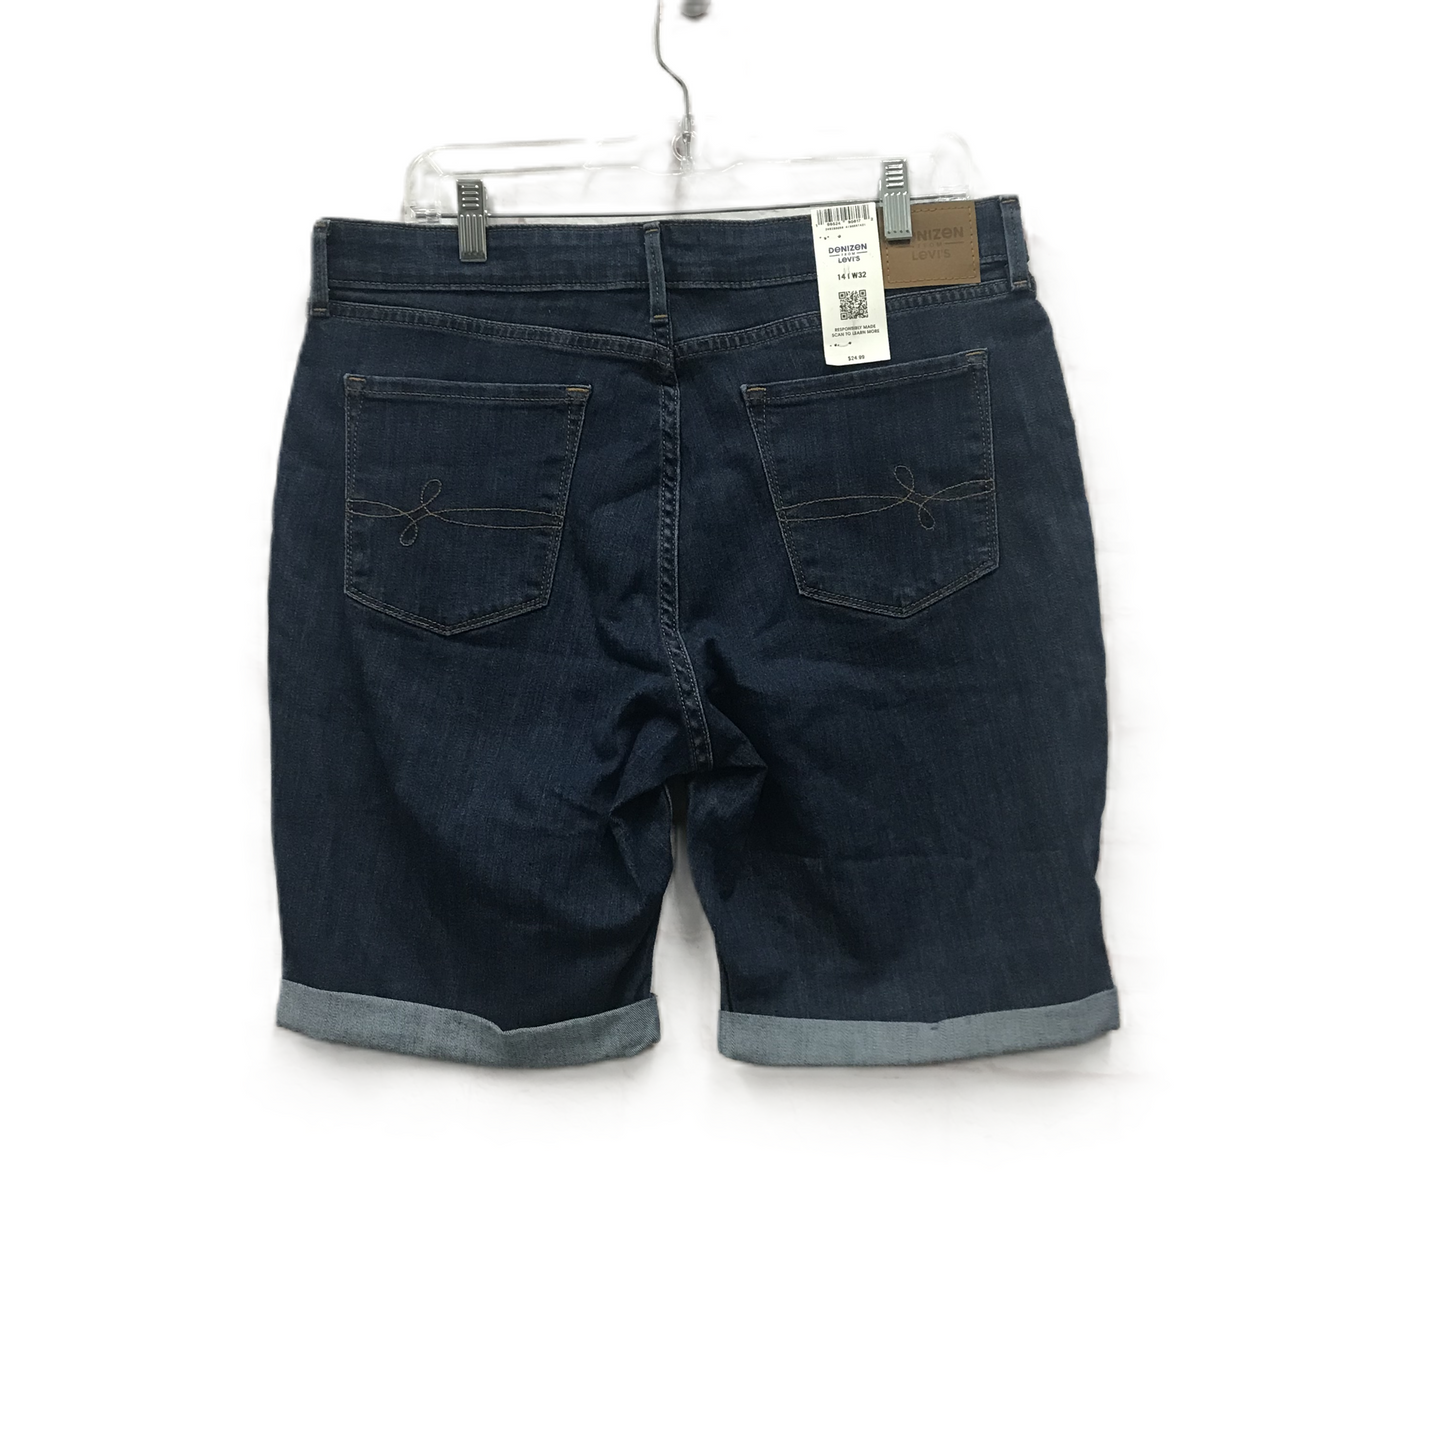 Blue Denim Shorts By Denizen By Levis, Size: 14